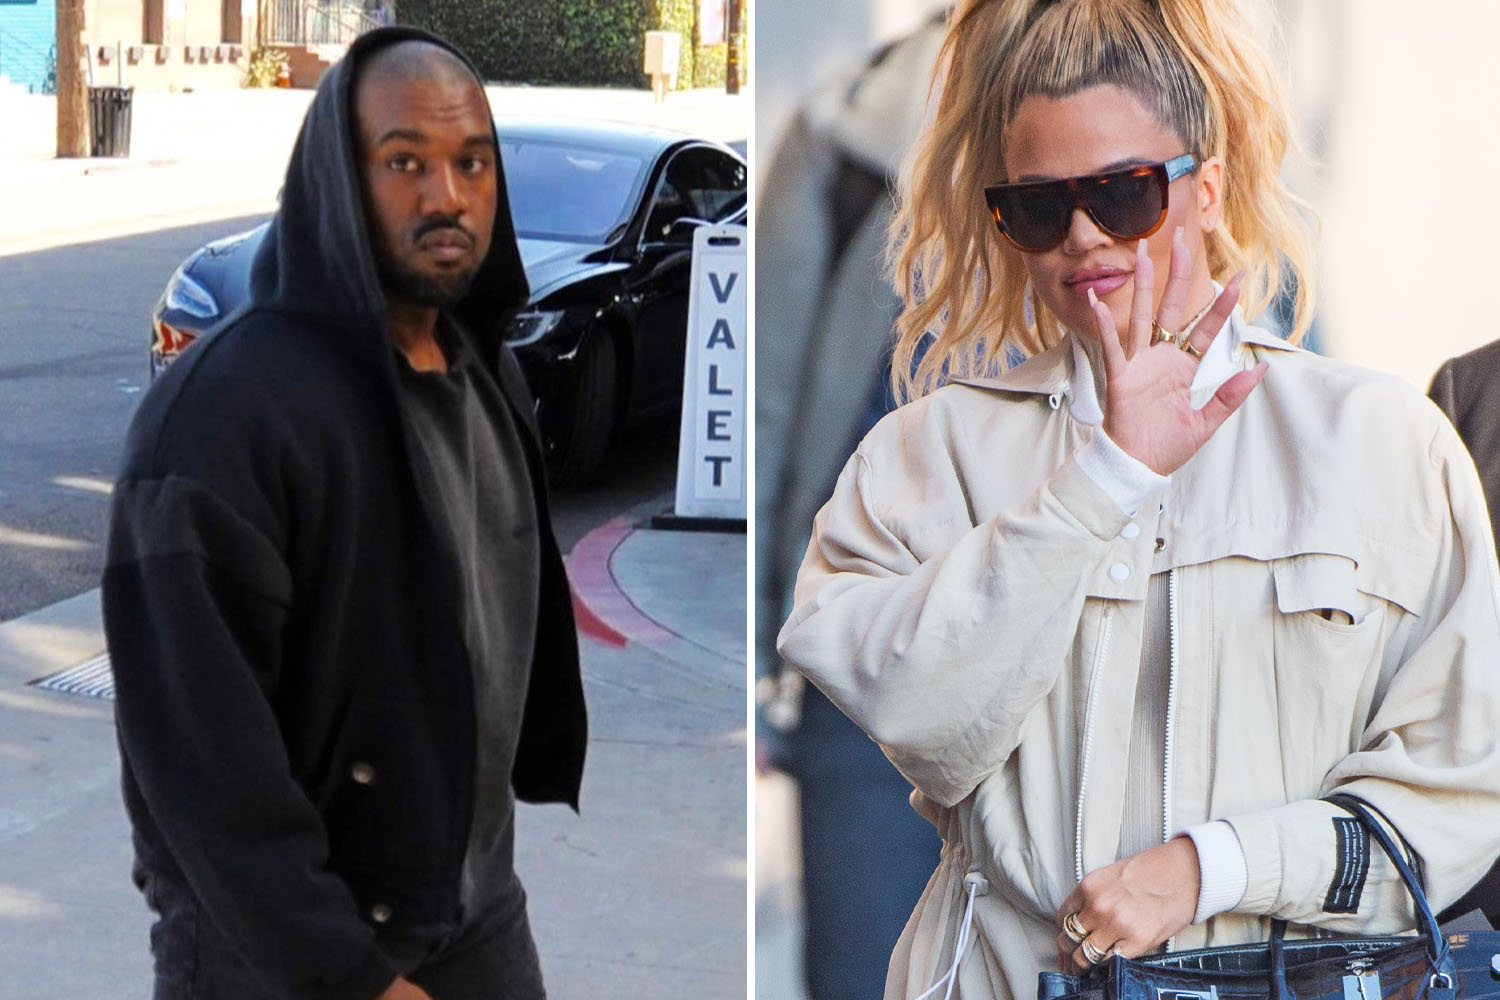 Khloe Kardashian's 'disgusting' tweets to Kanye West's ex exposed